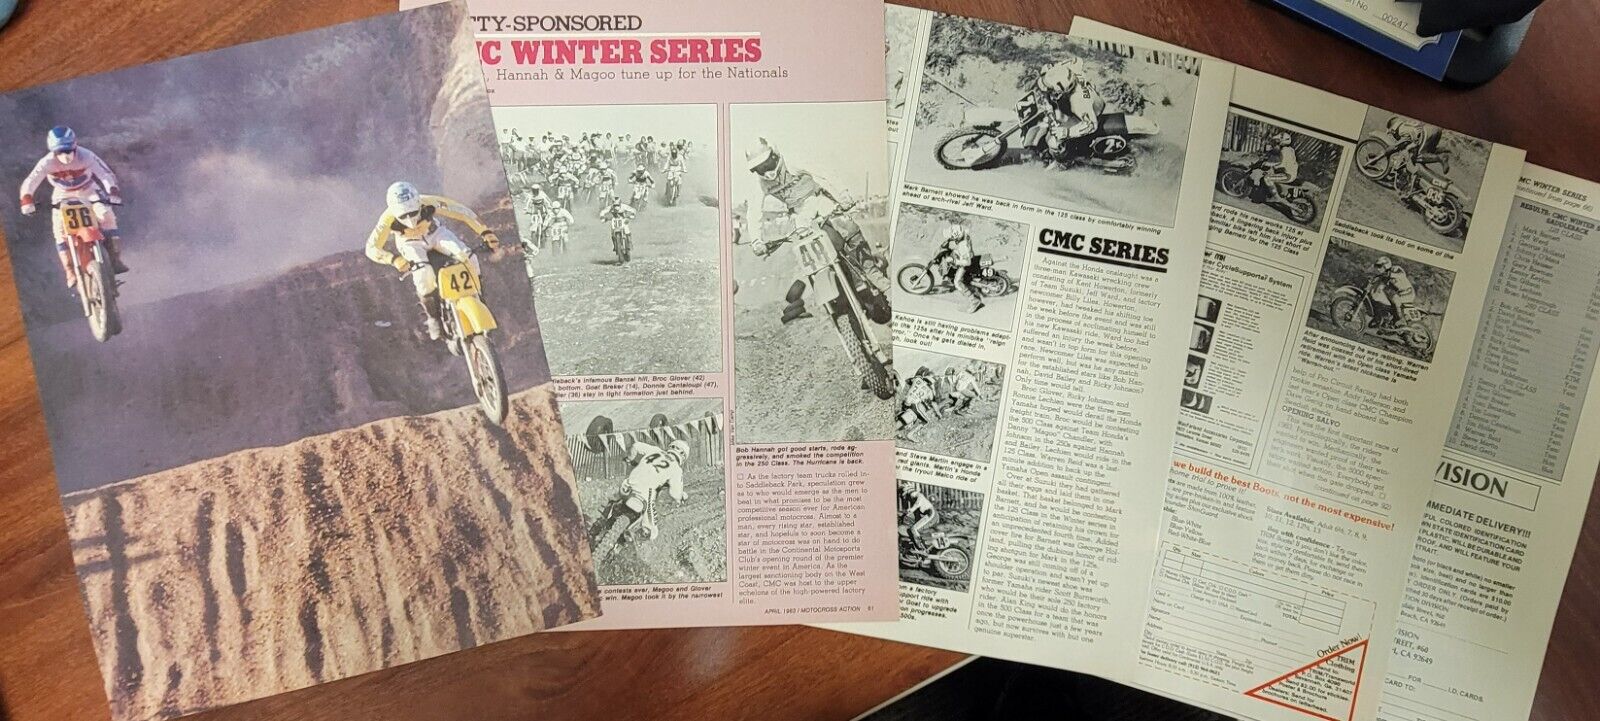 1983 CMC Winter Series 6p Saddleback Race Article Magoo Glover Hannah